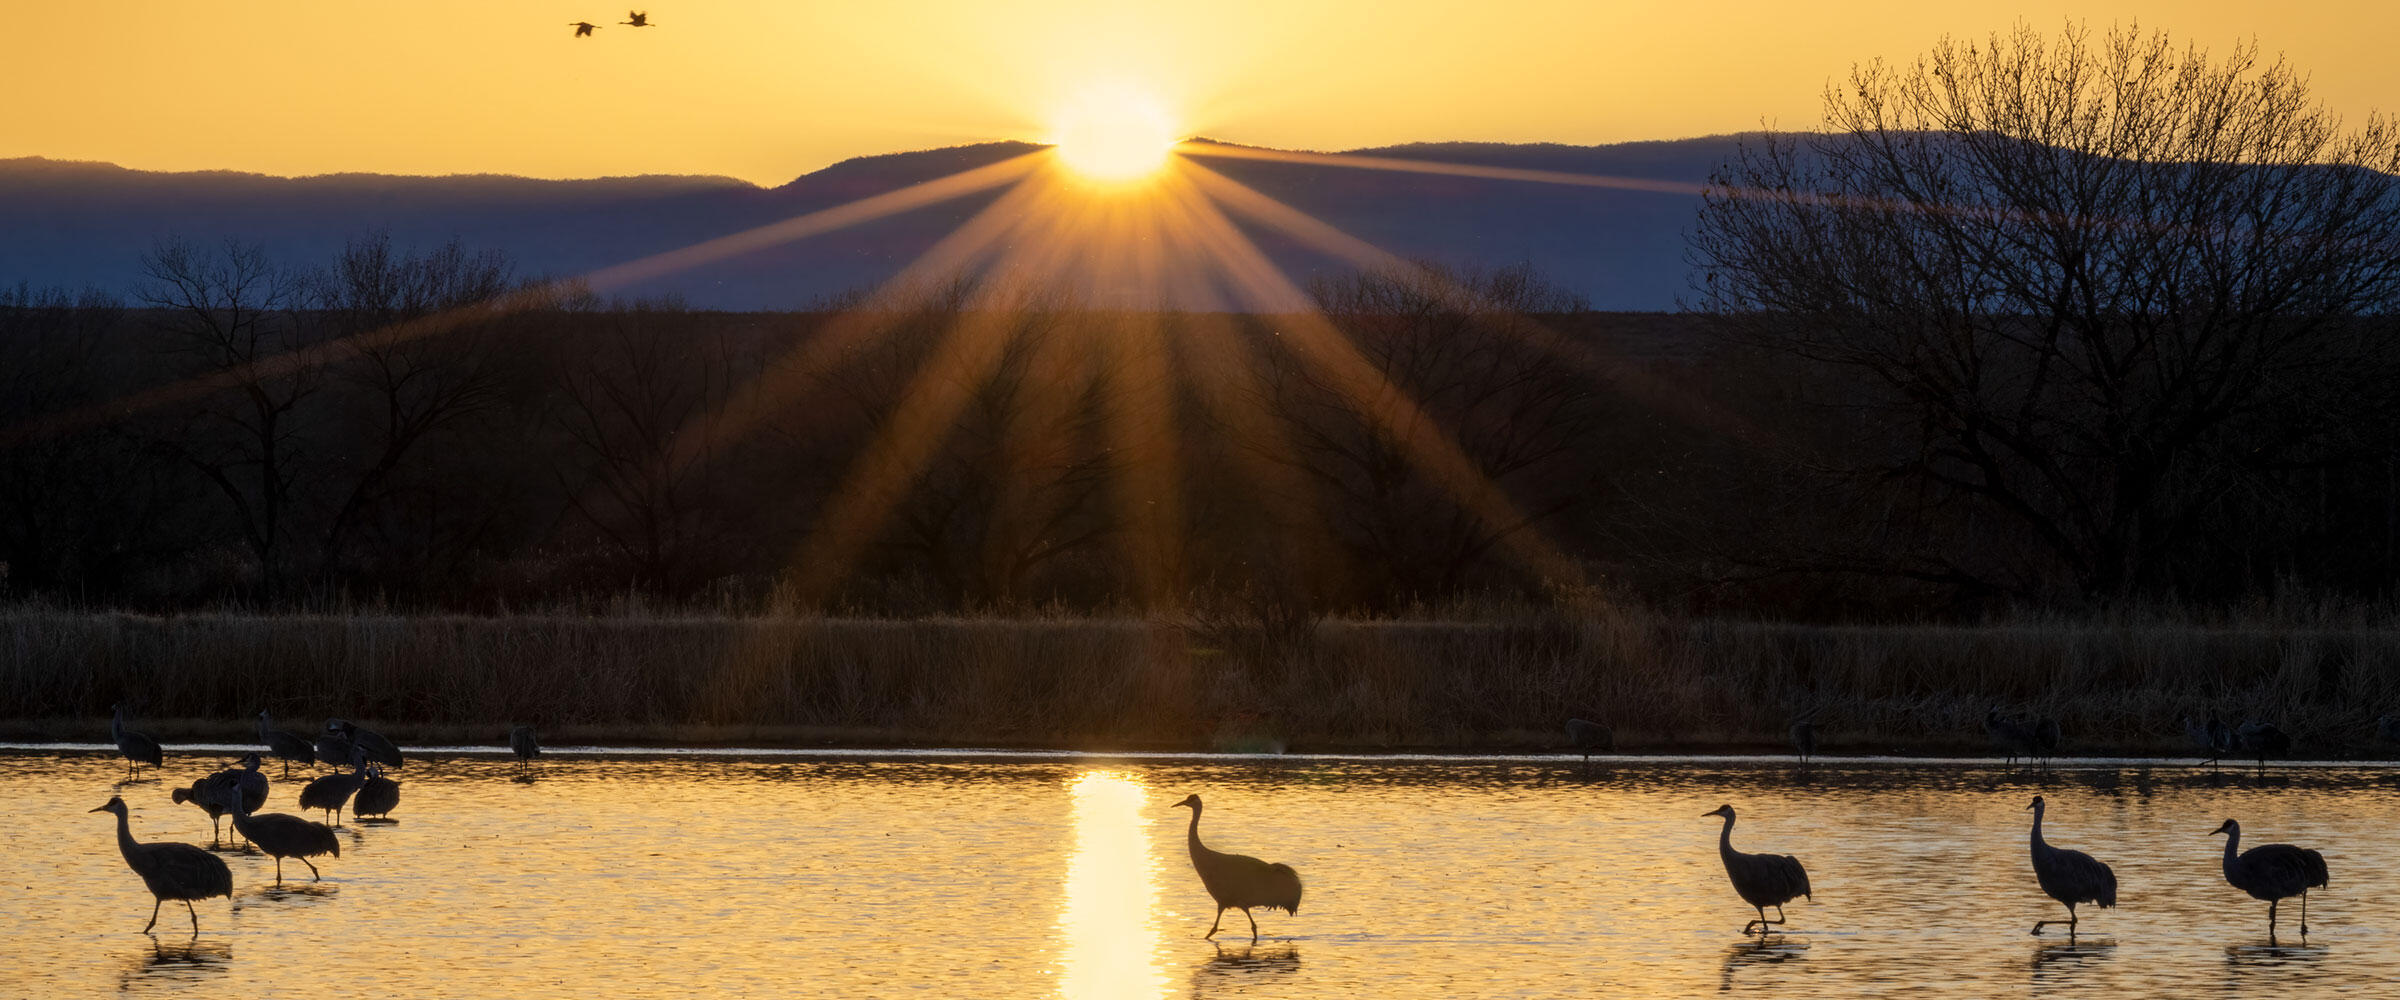 Sandhill Cranes walk in a lake at sunset.